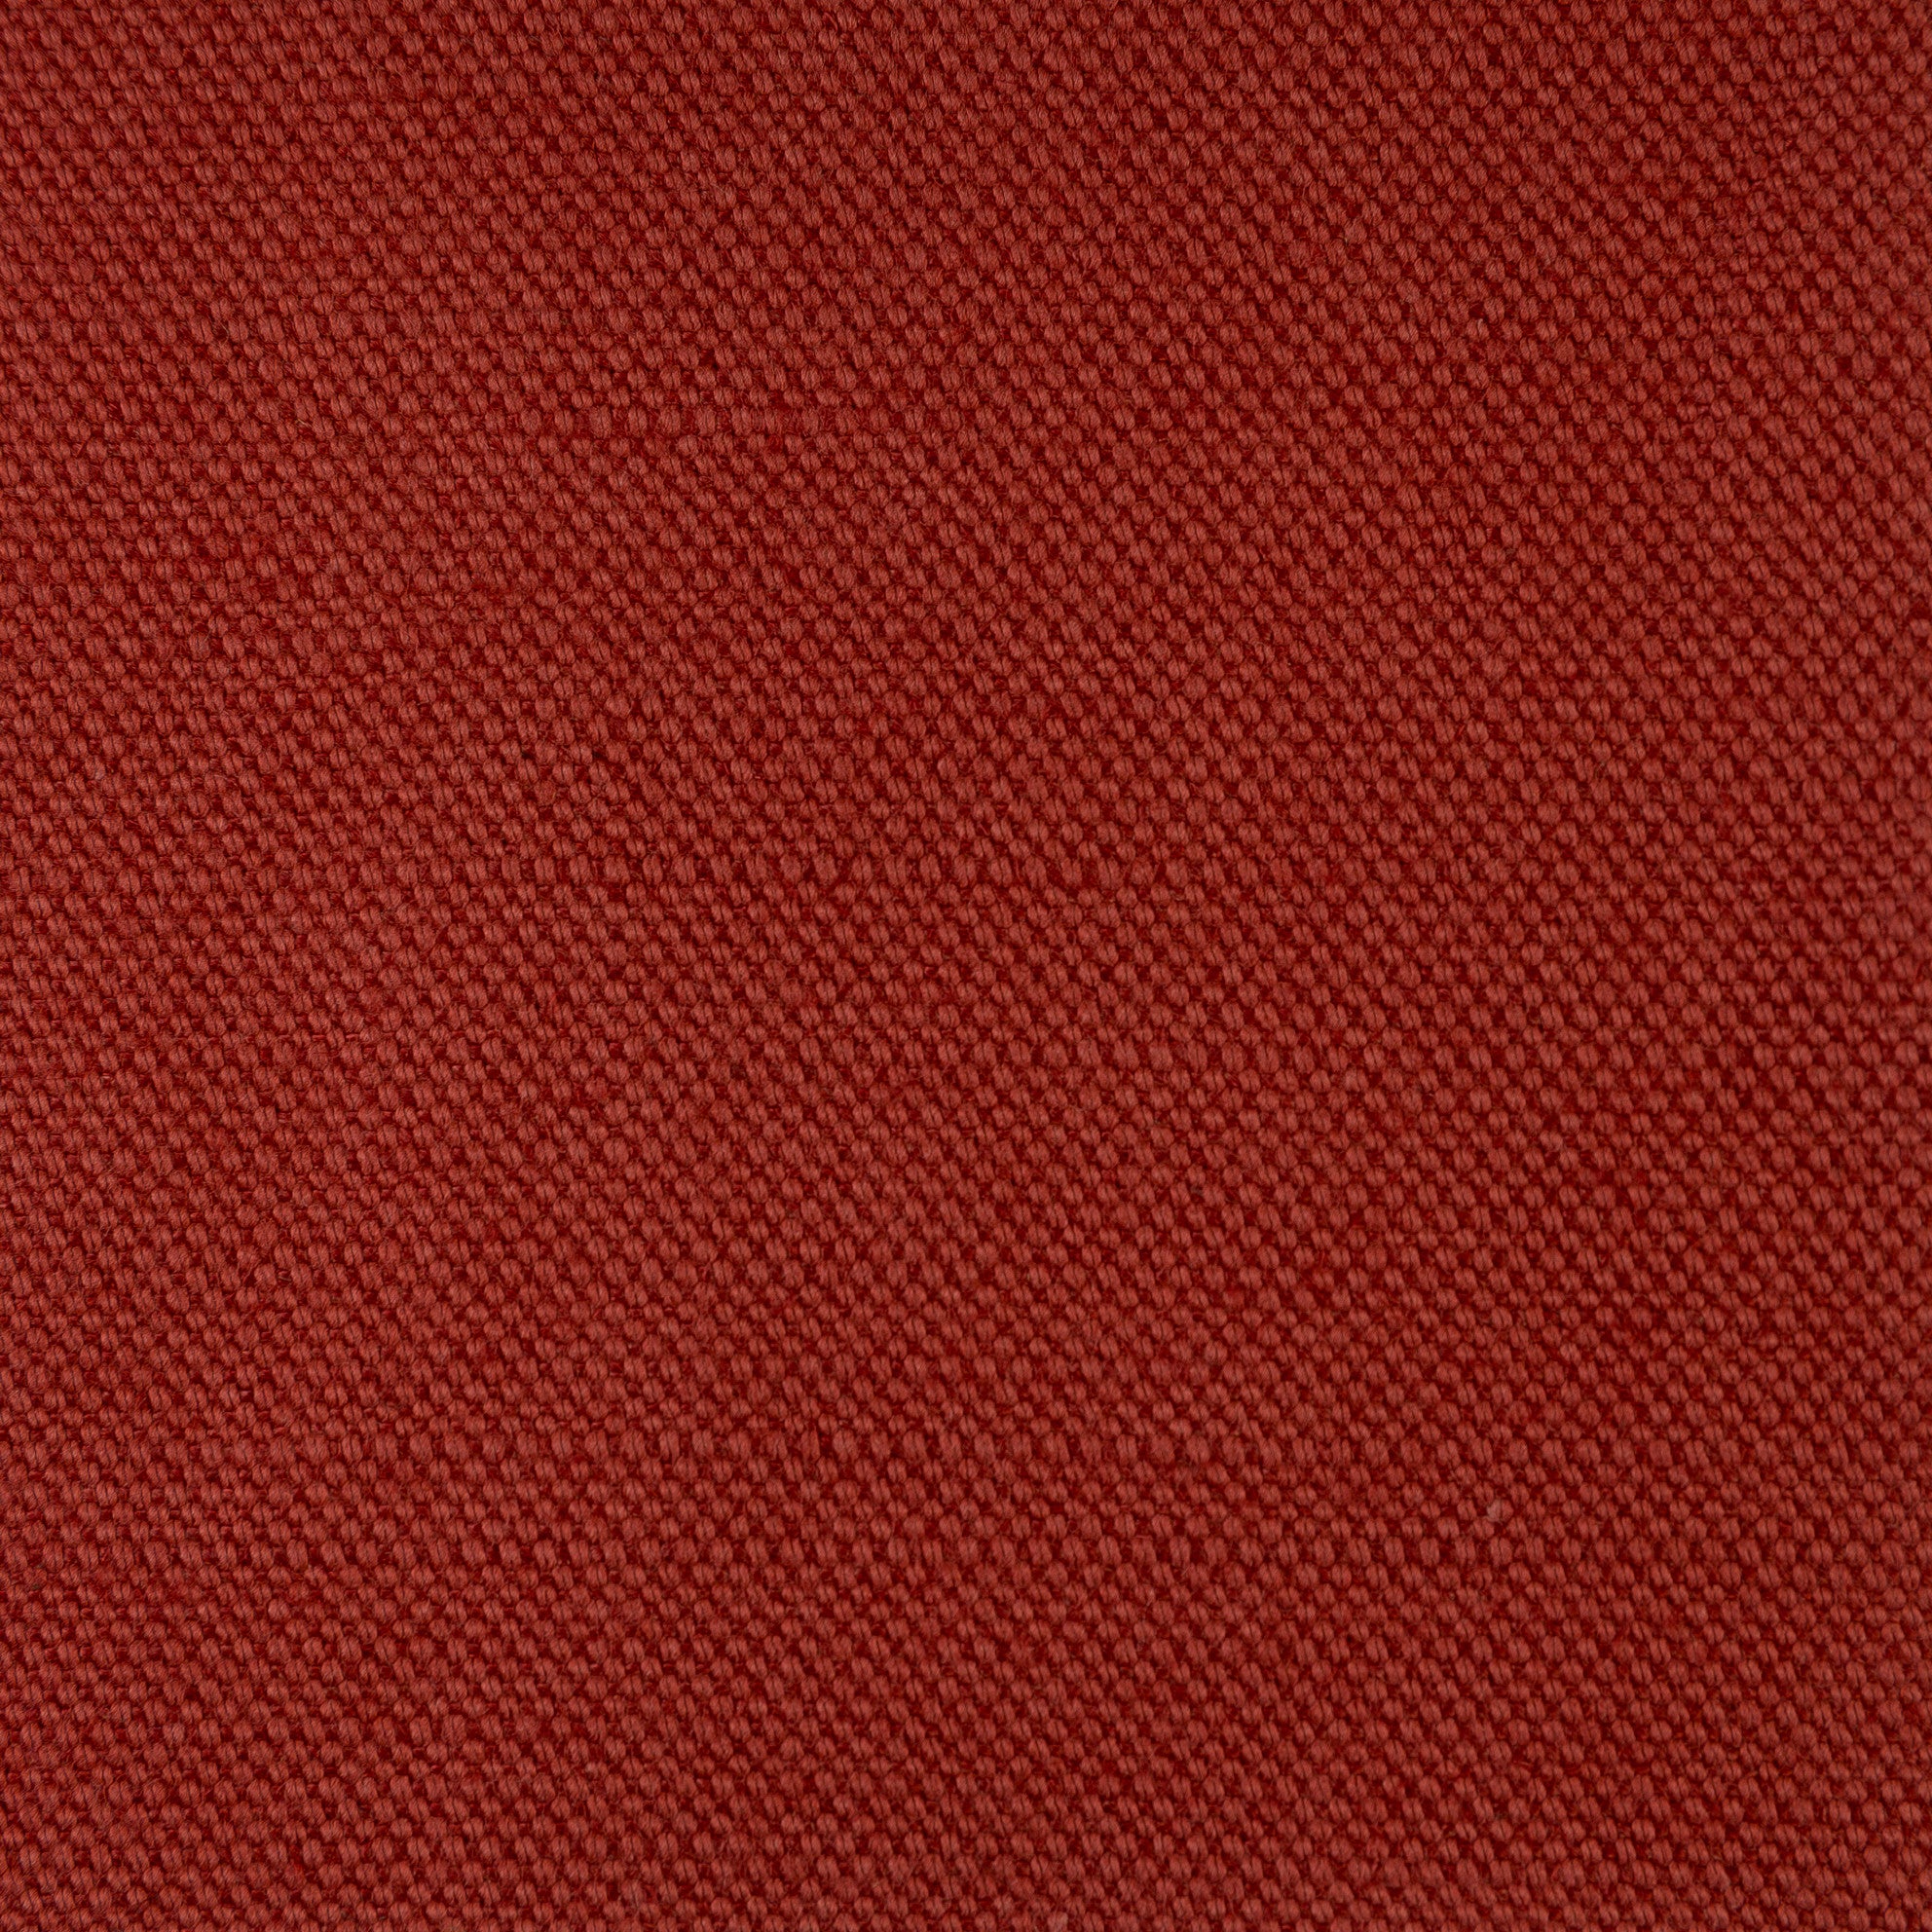 Woven Plain Fabric - Lynton 11/013 Burdock | Nicholas Engert Interiors